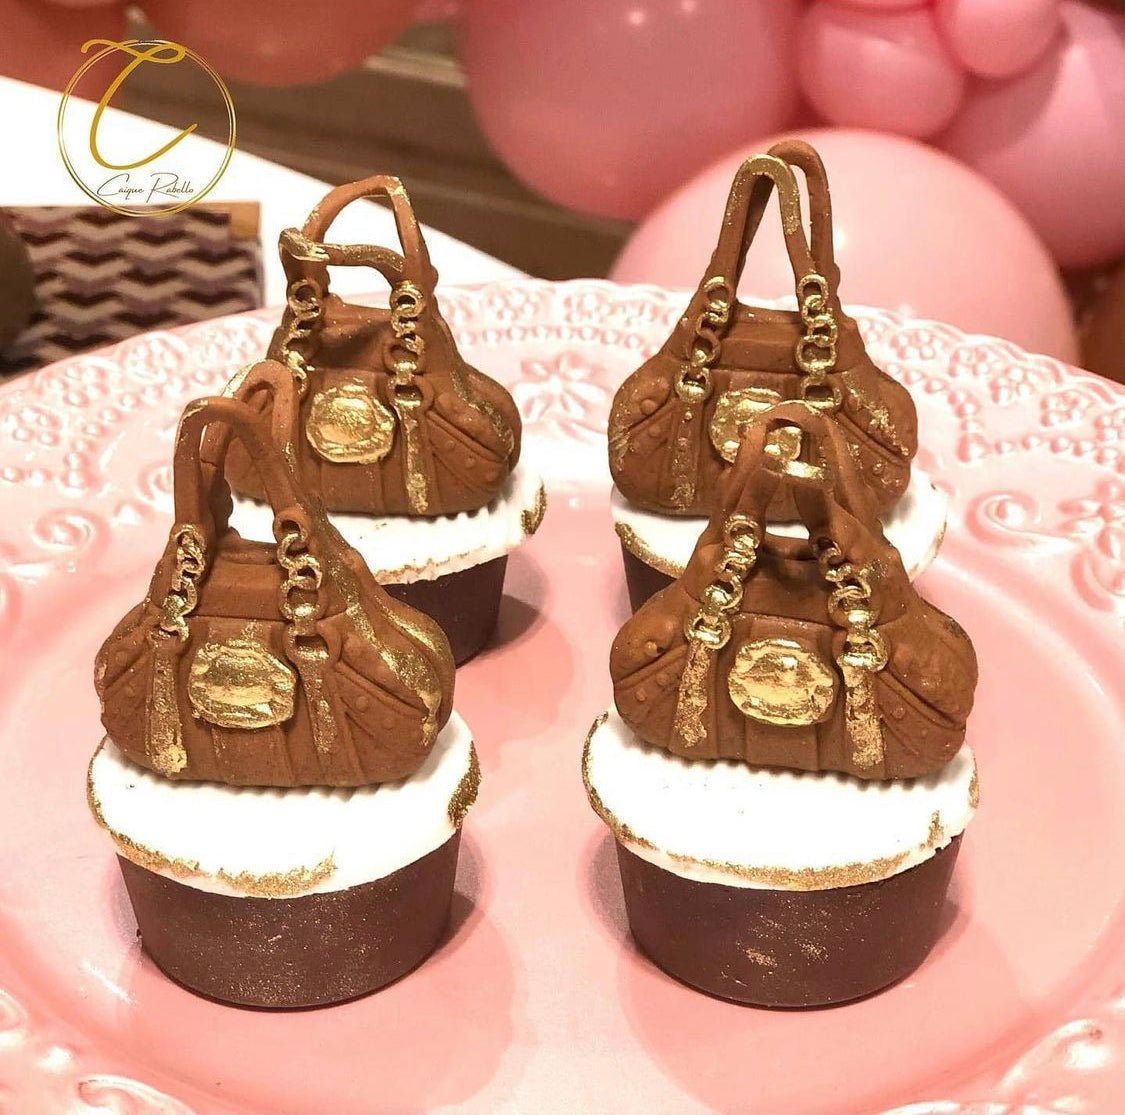 FLEXARTE Purse Handbag Silicone Mold Girls Birthday Cake Cupcake Decorating Fondant Baking Mold Chocolate Candy Mould DIY